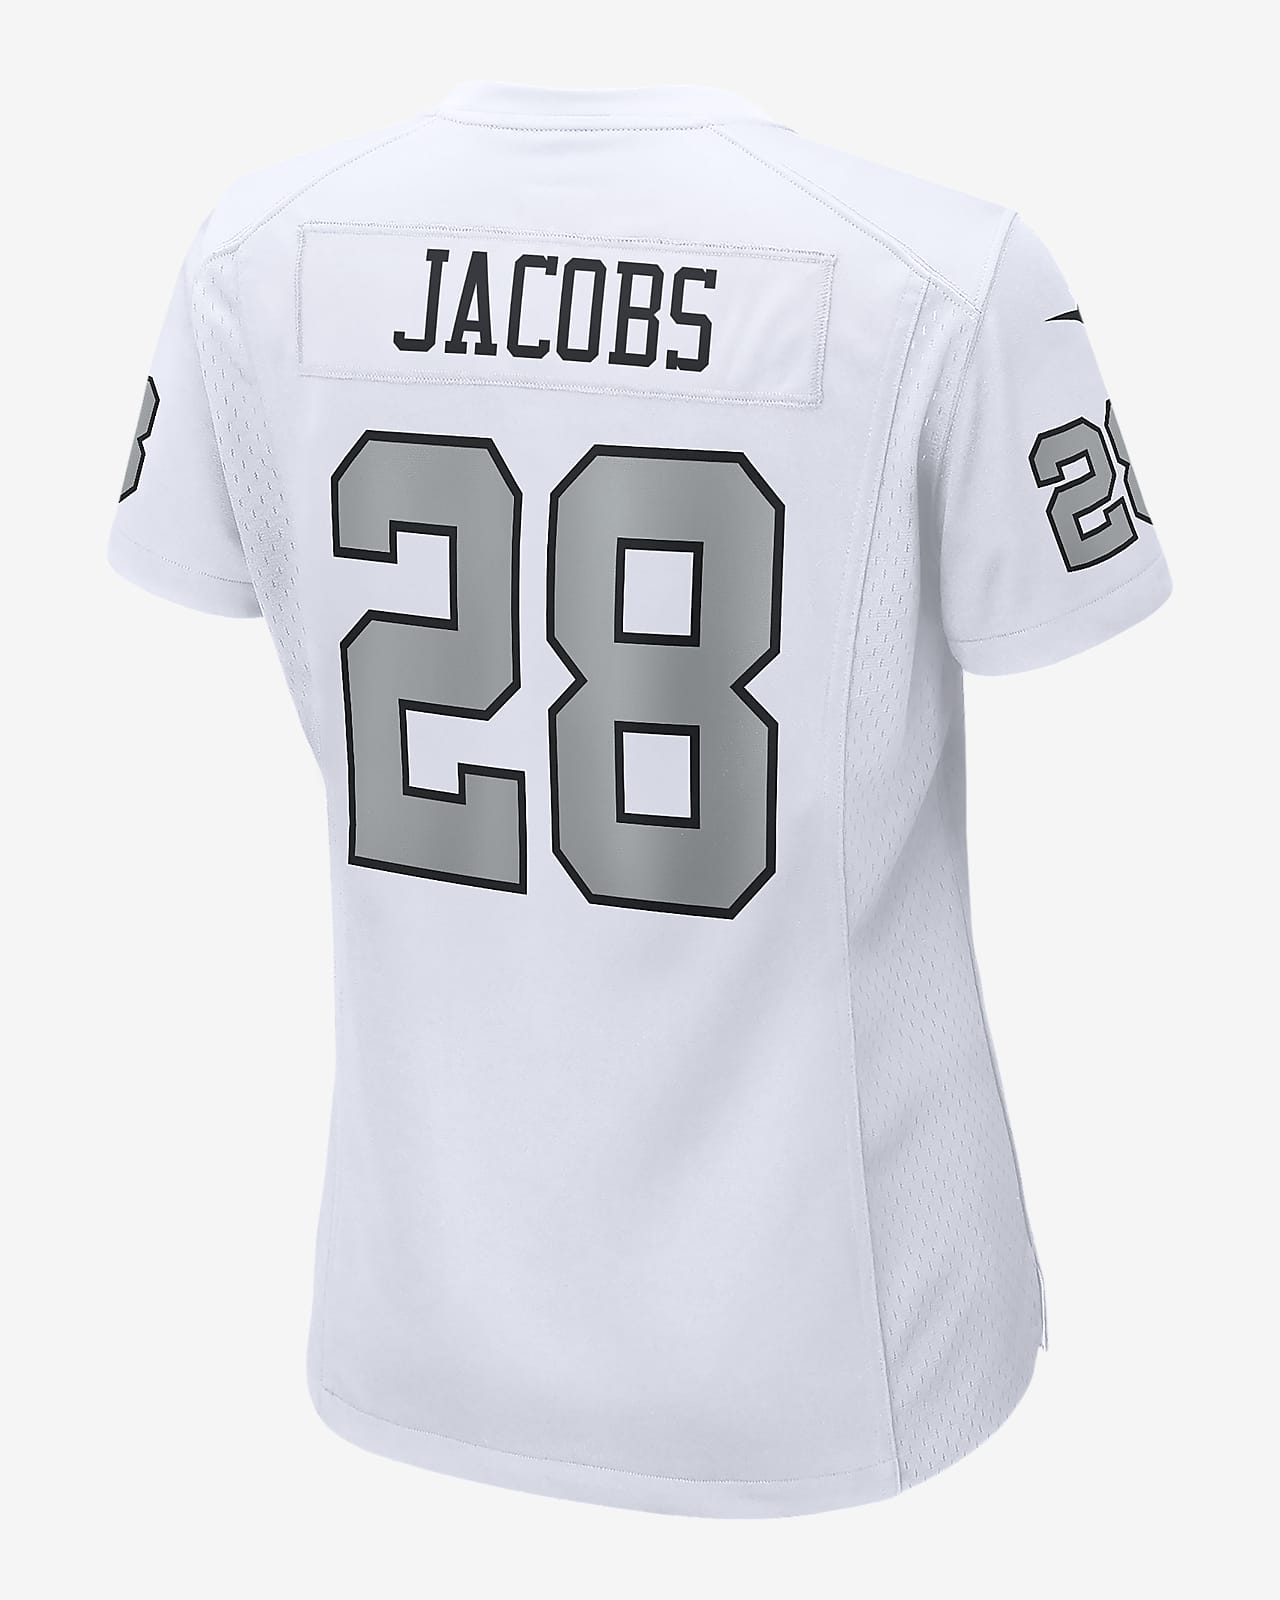 NFL Las Vegas Raiders (Josh Jacobs) Women's Game Football Jersey.